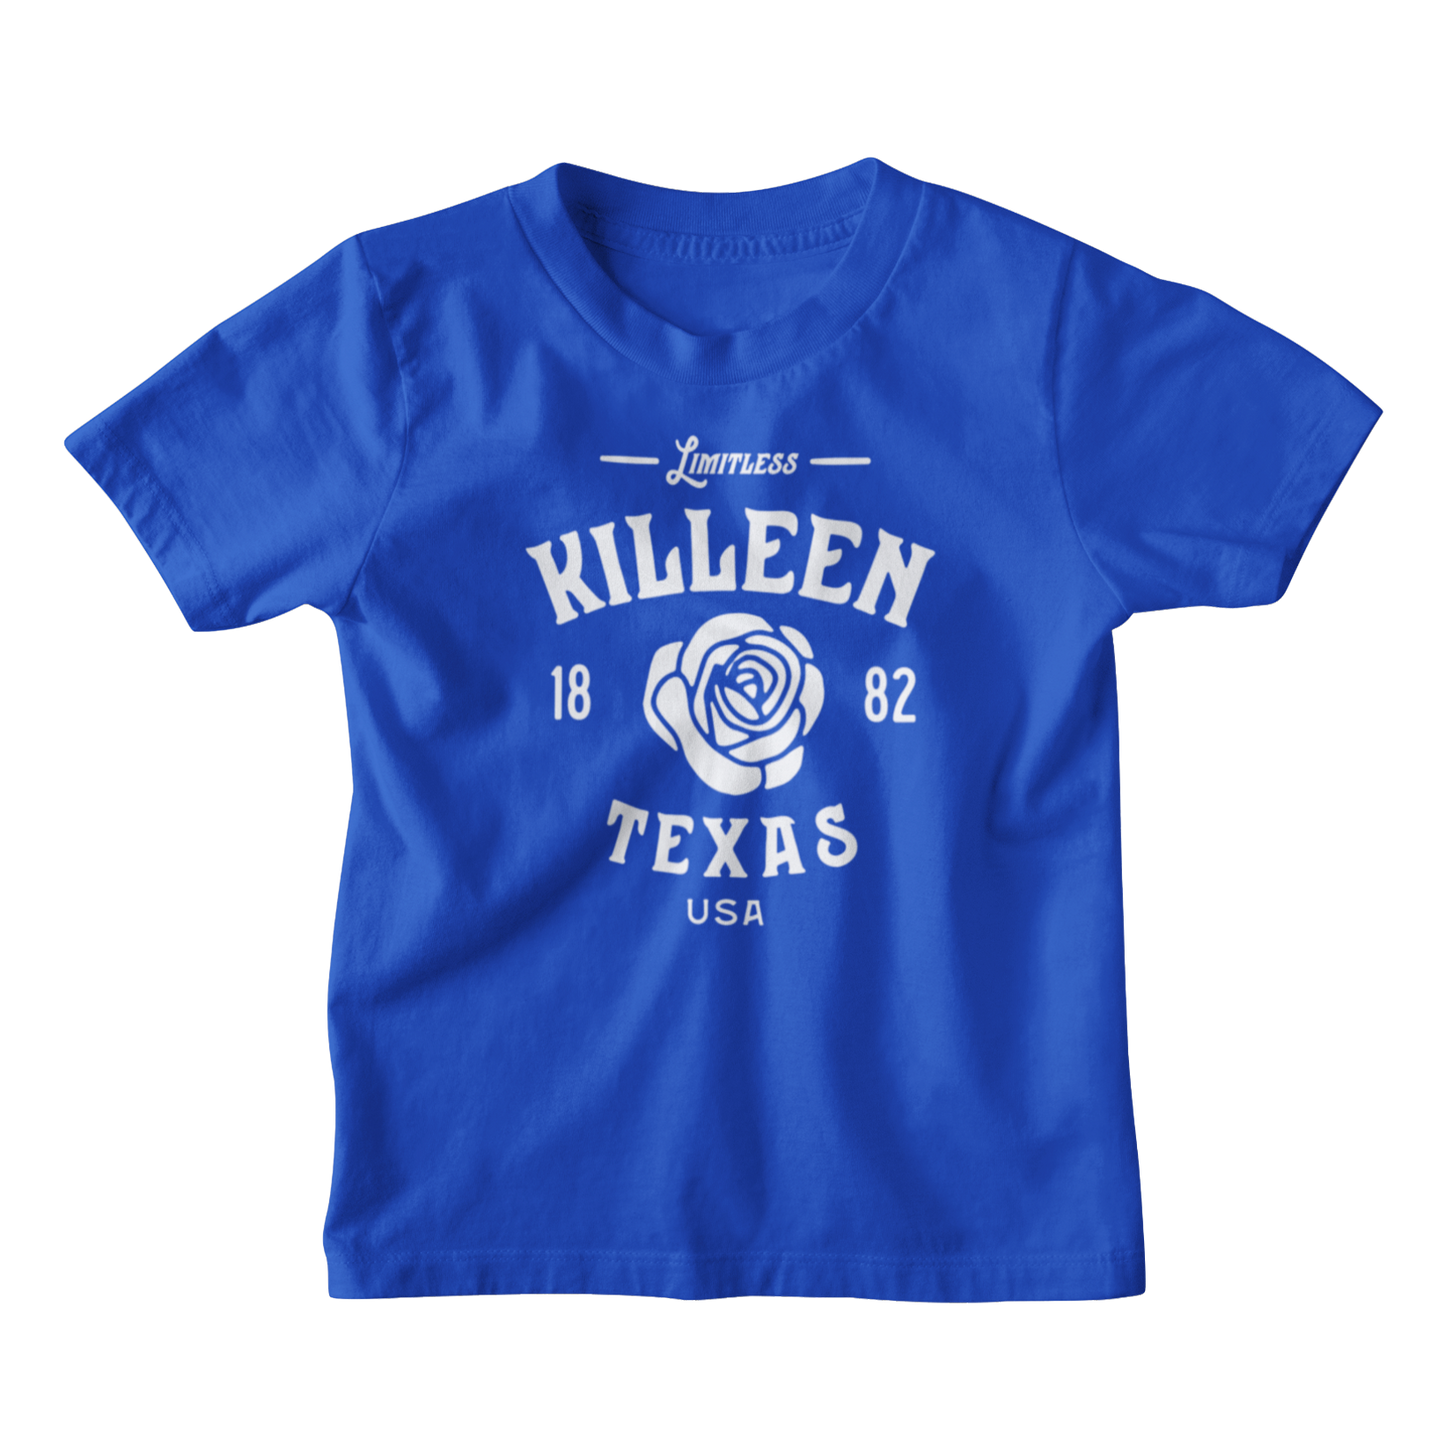 Killeen Texas Youth T-shirt - Rose